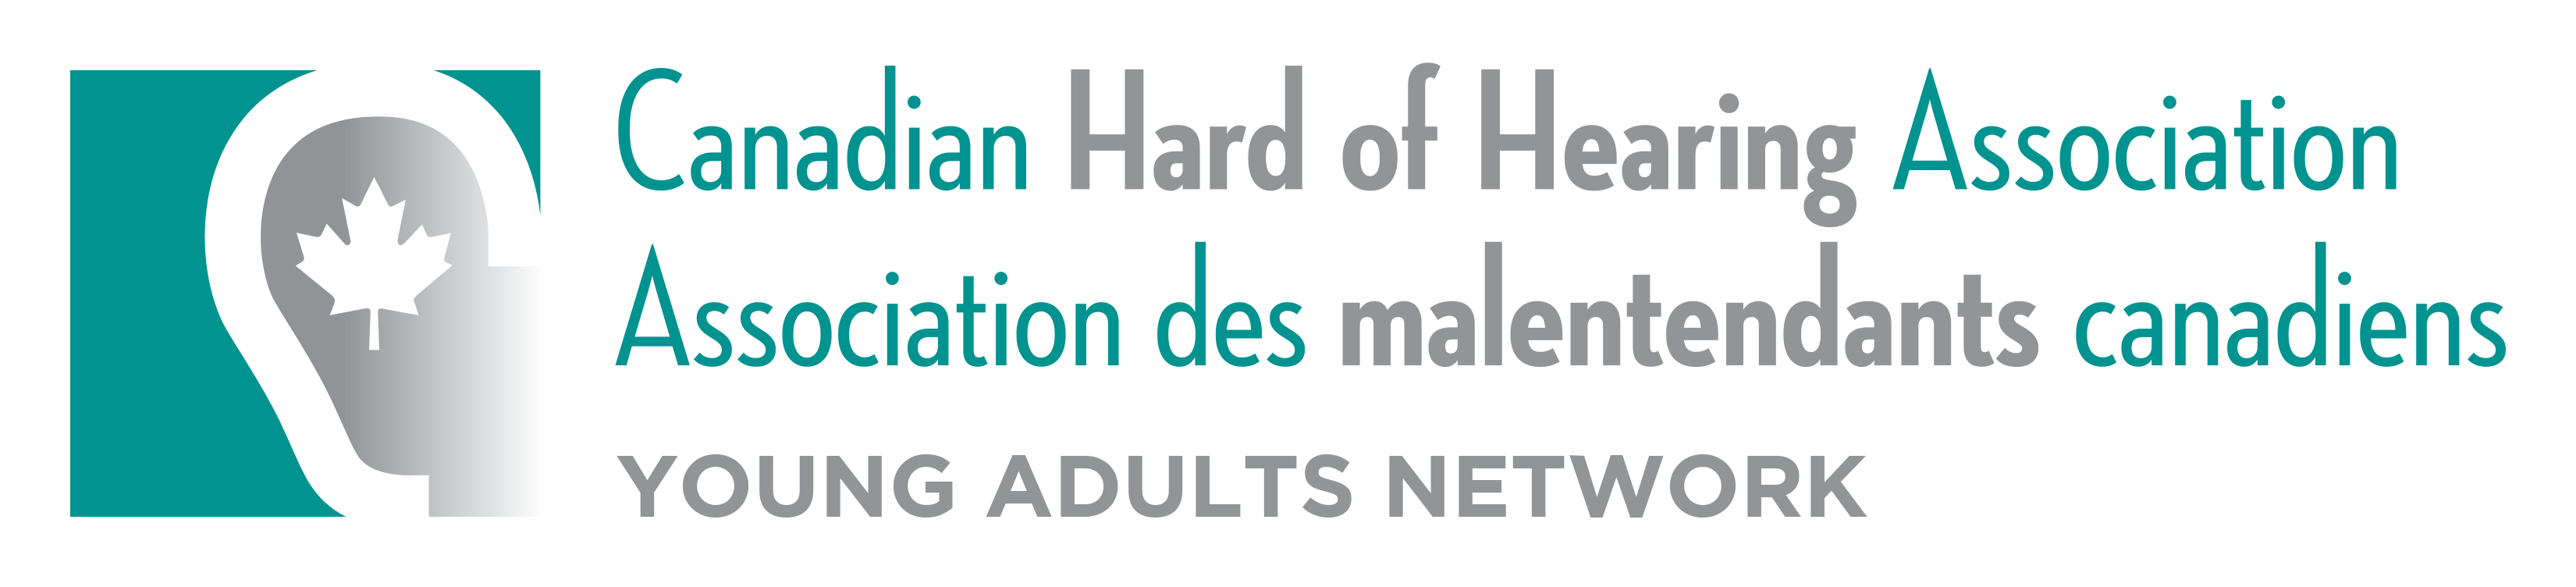 Canadian Hard of Hearing Association logo